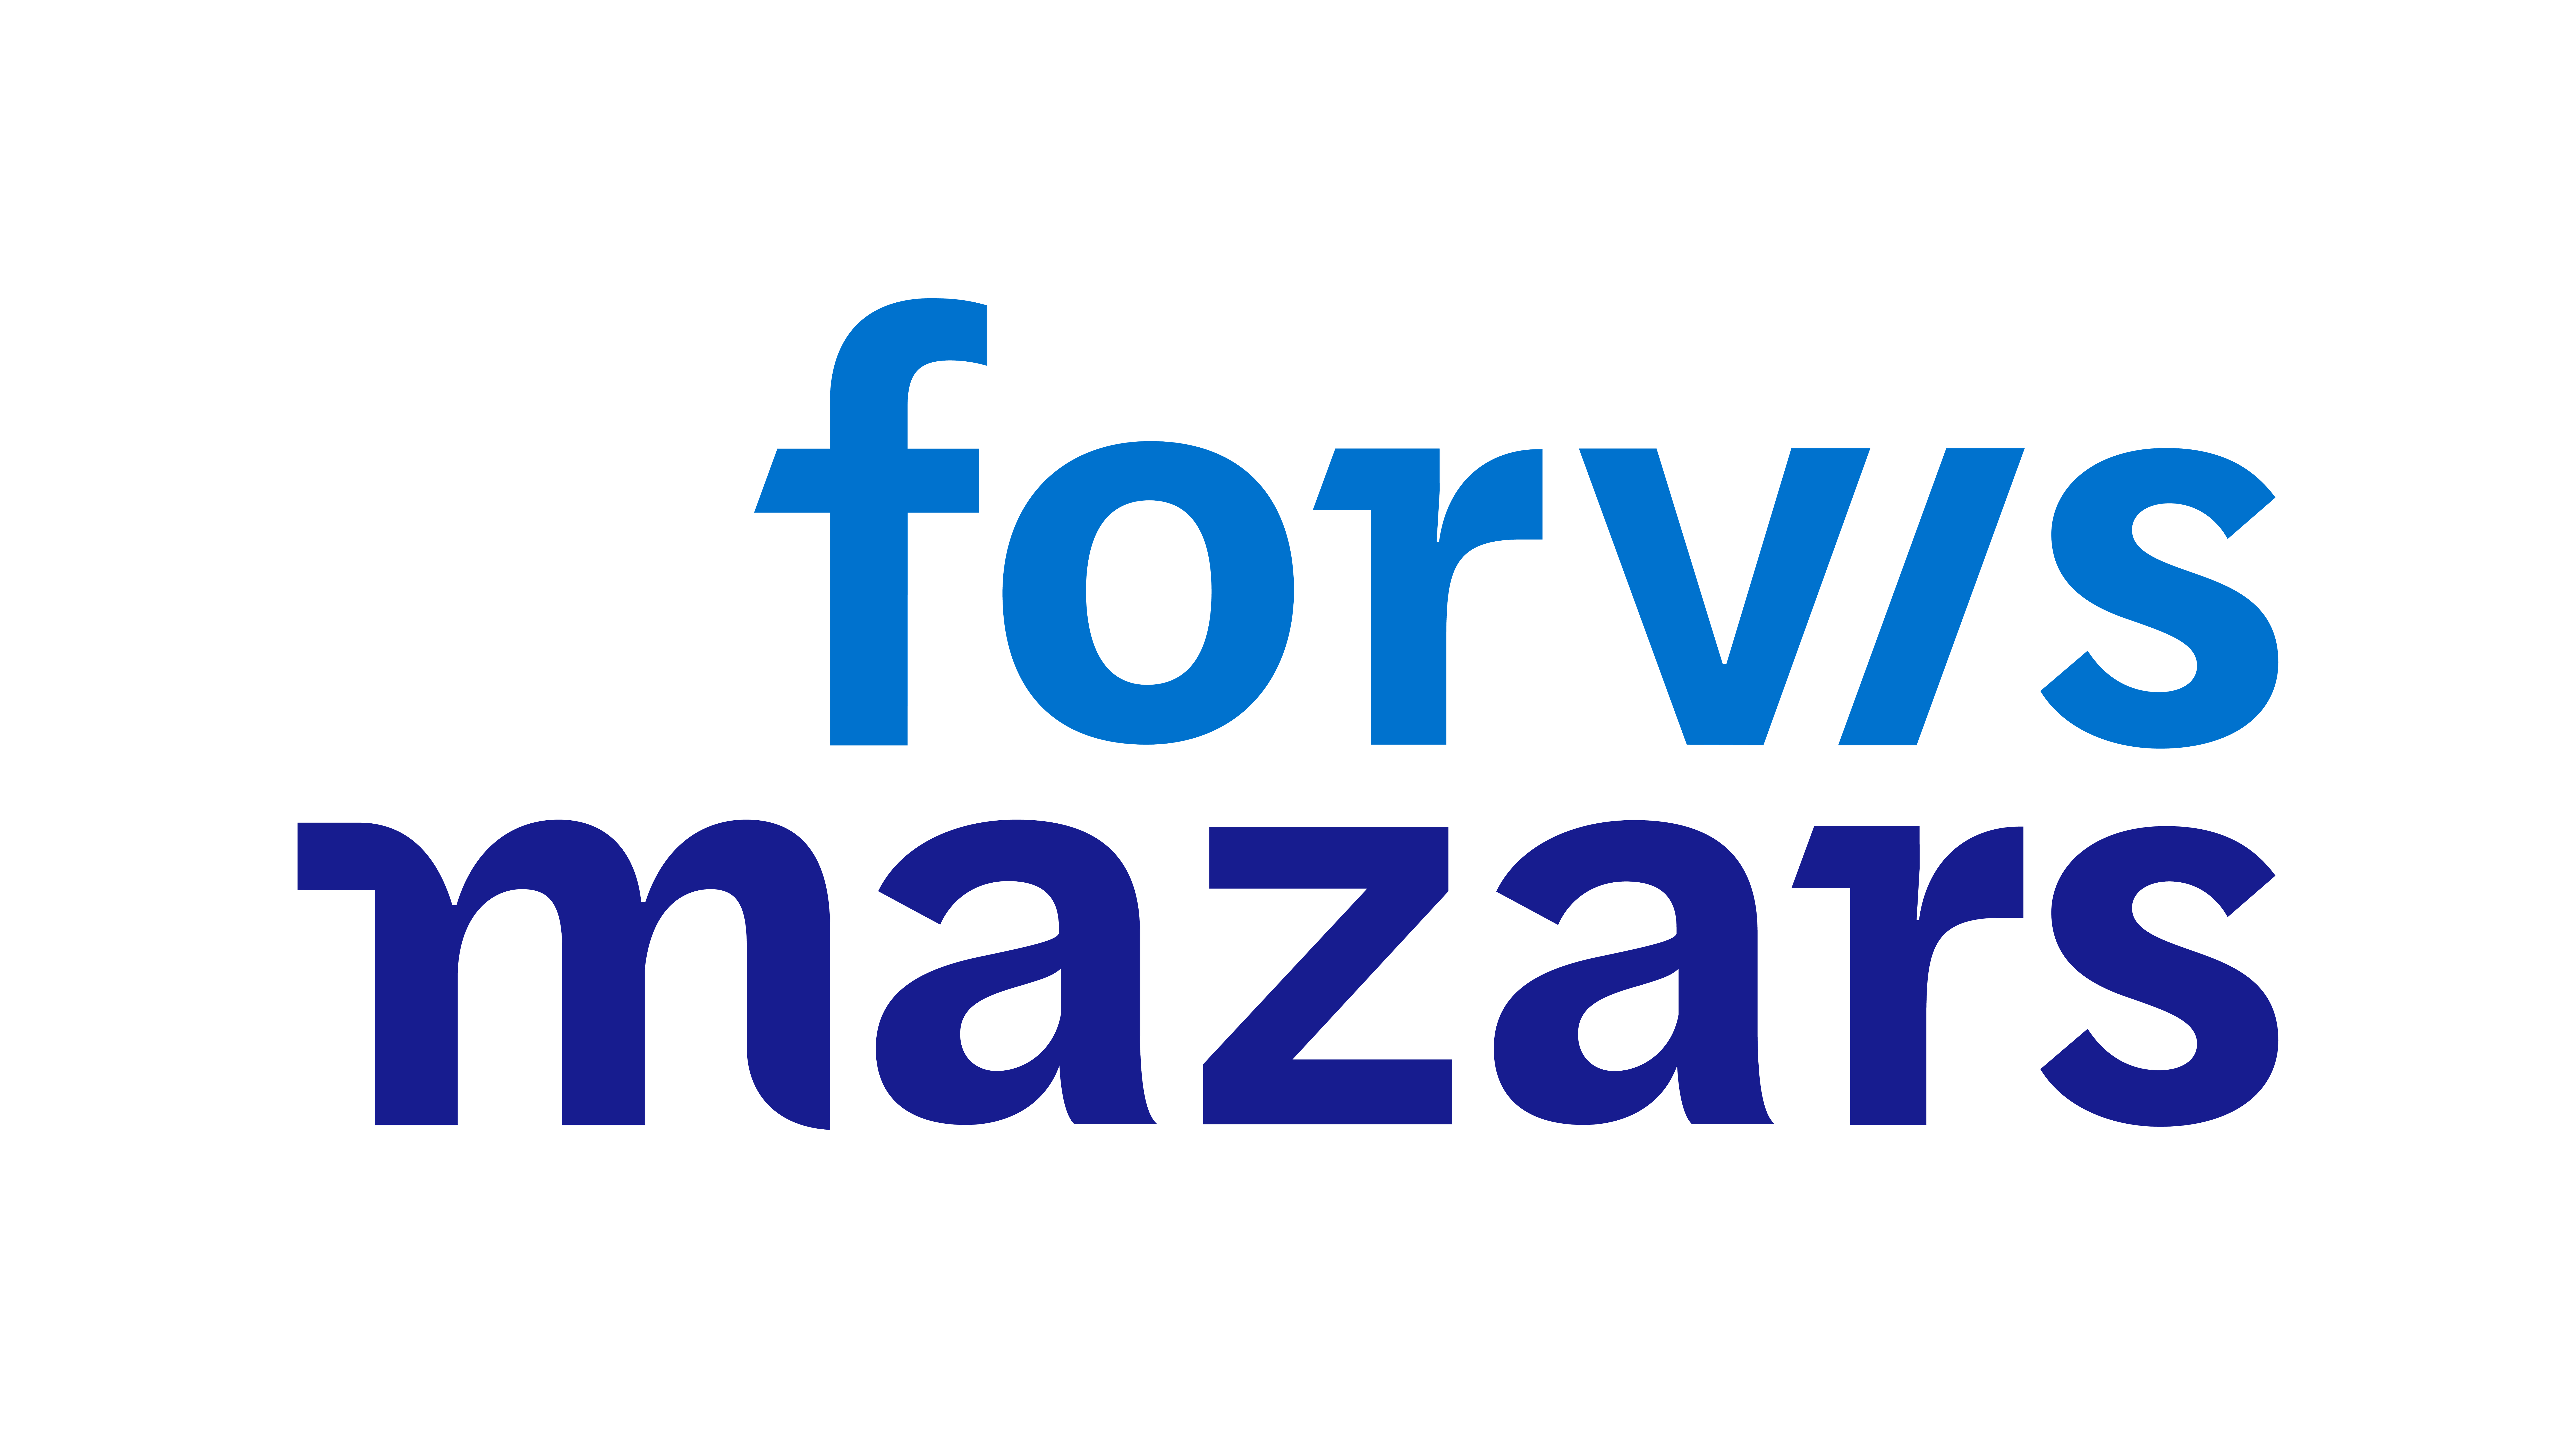 forvis mazars logo